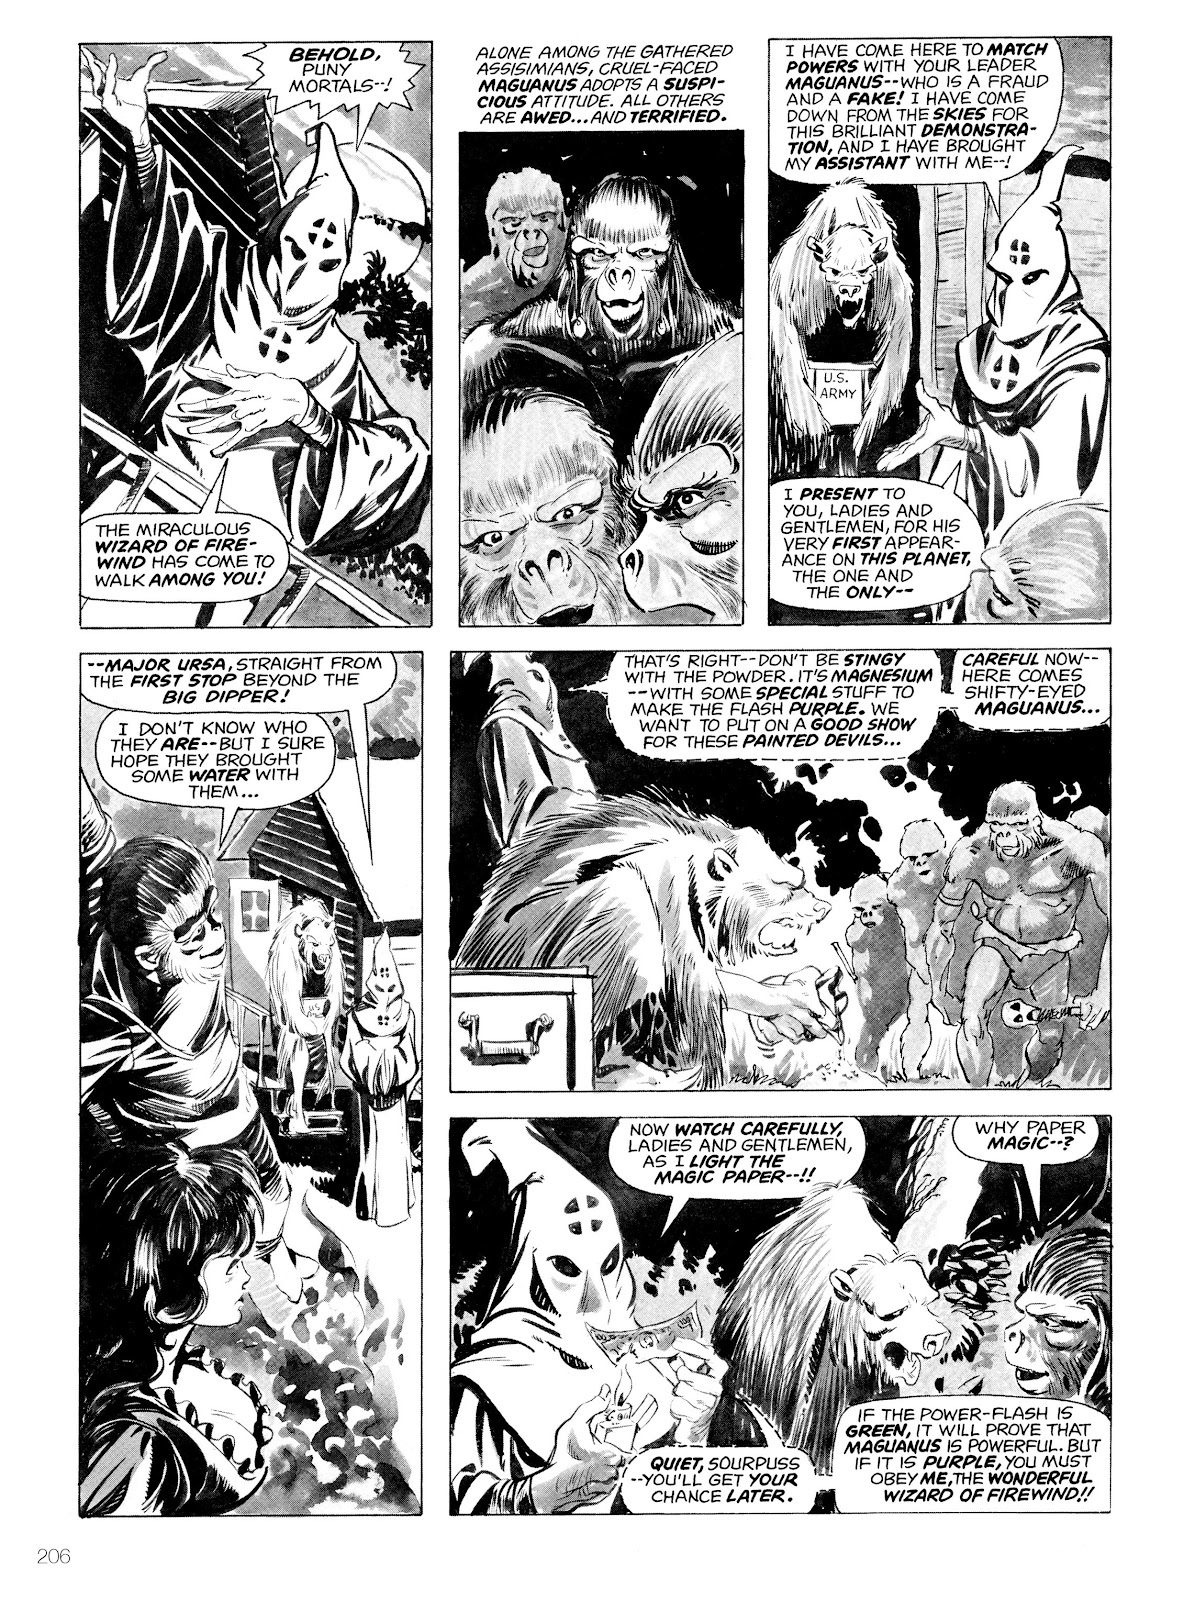 Manga – Page 2 – The Magic Planet